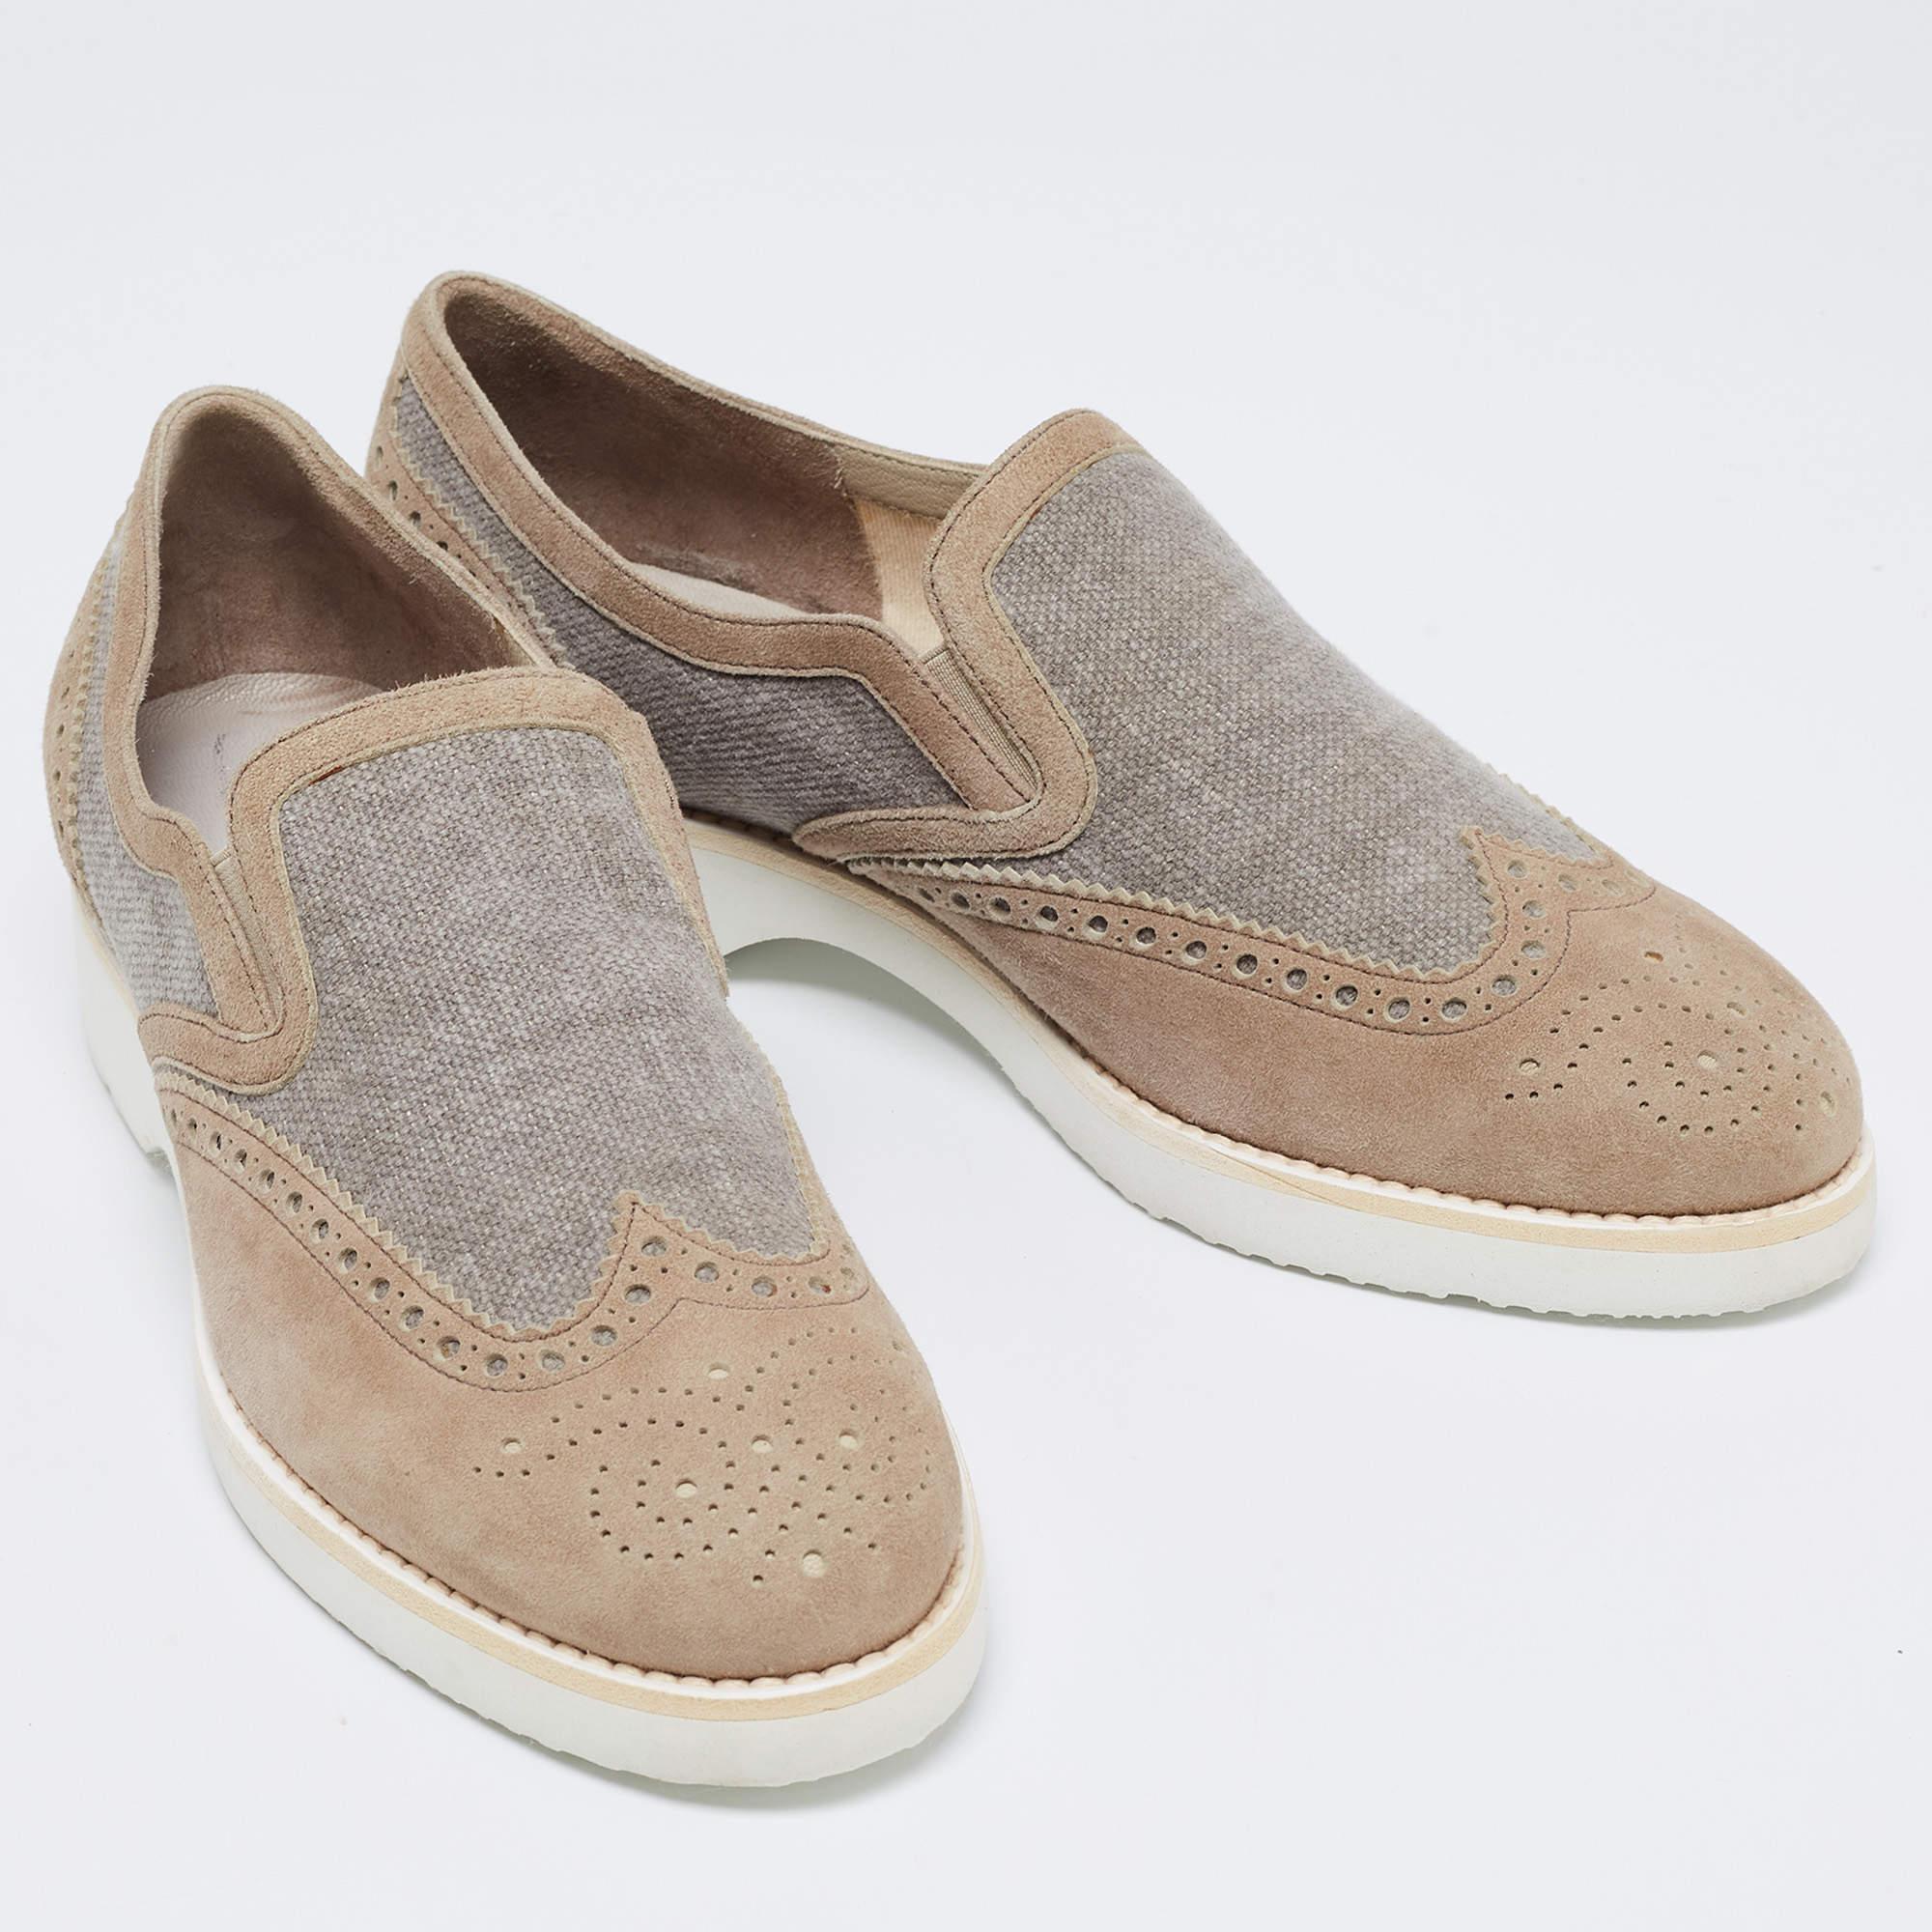 Santoni Grey Brogue Suede And Canvas Slip On Sneakers Size 39.5 In New Condition For Sale In Dubai, Al Qouz 2